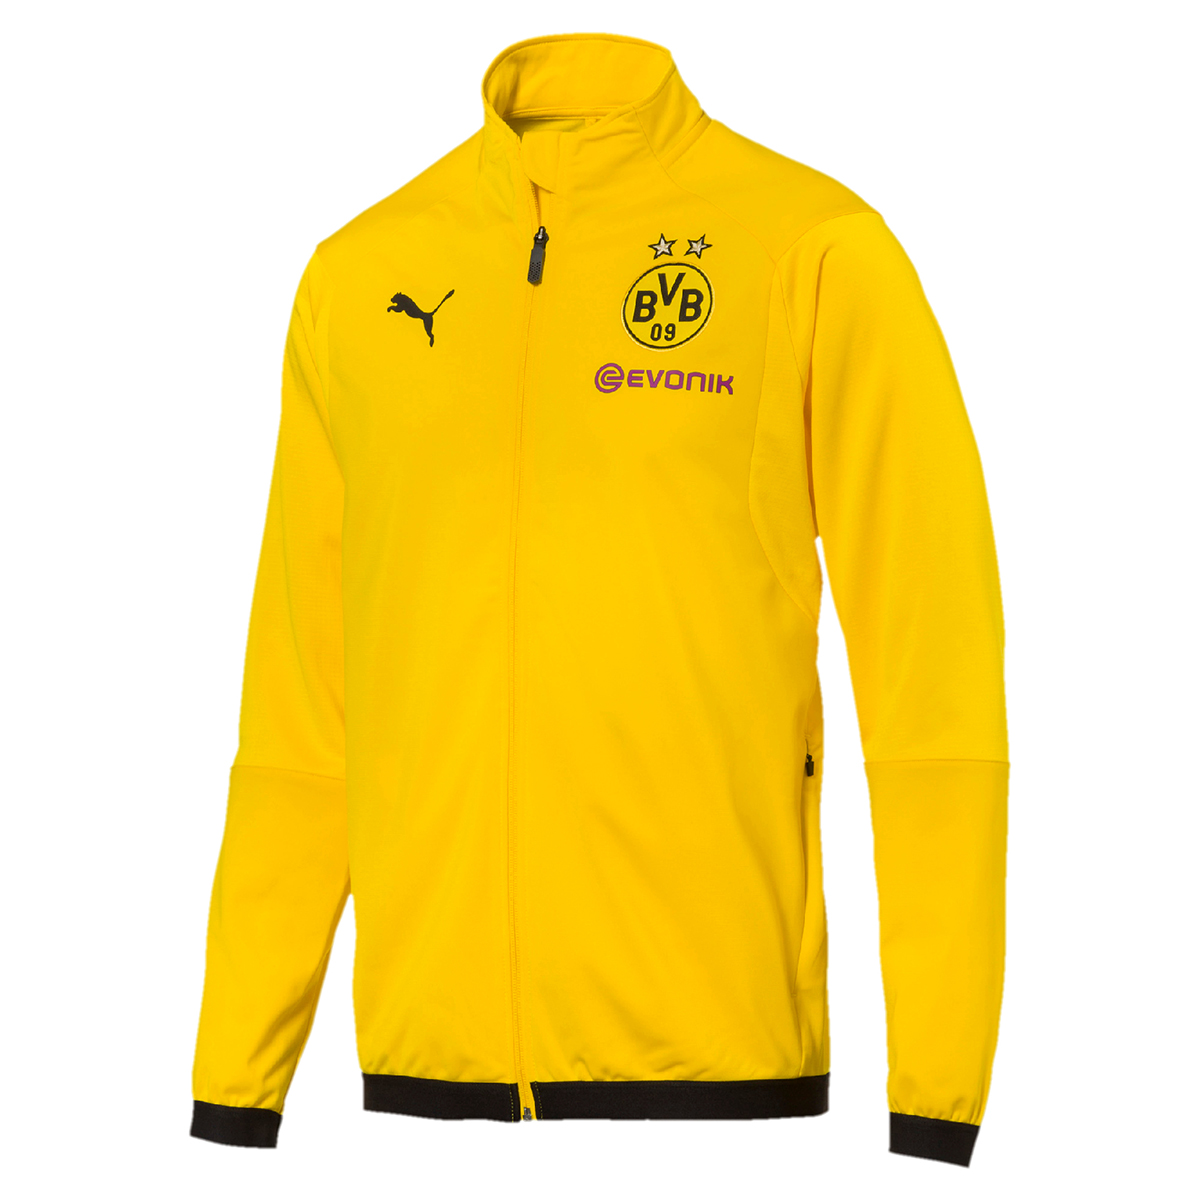 Puma BVB Poly Jacket with Sponsor Herren 753735 01 Borussia Dortmund 2018/2019